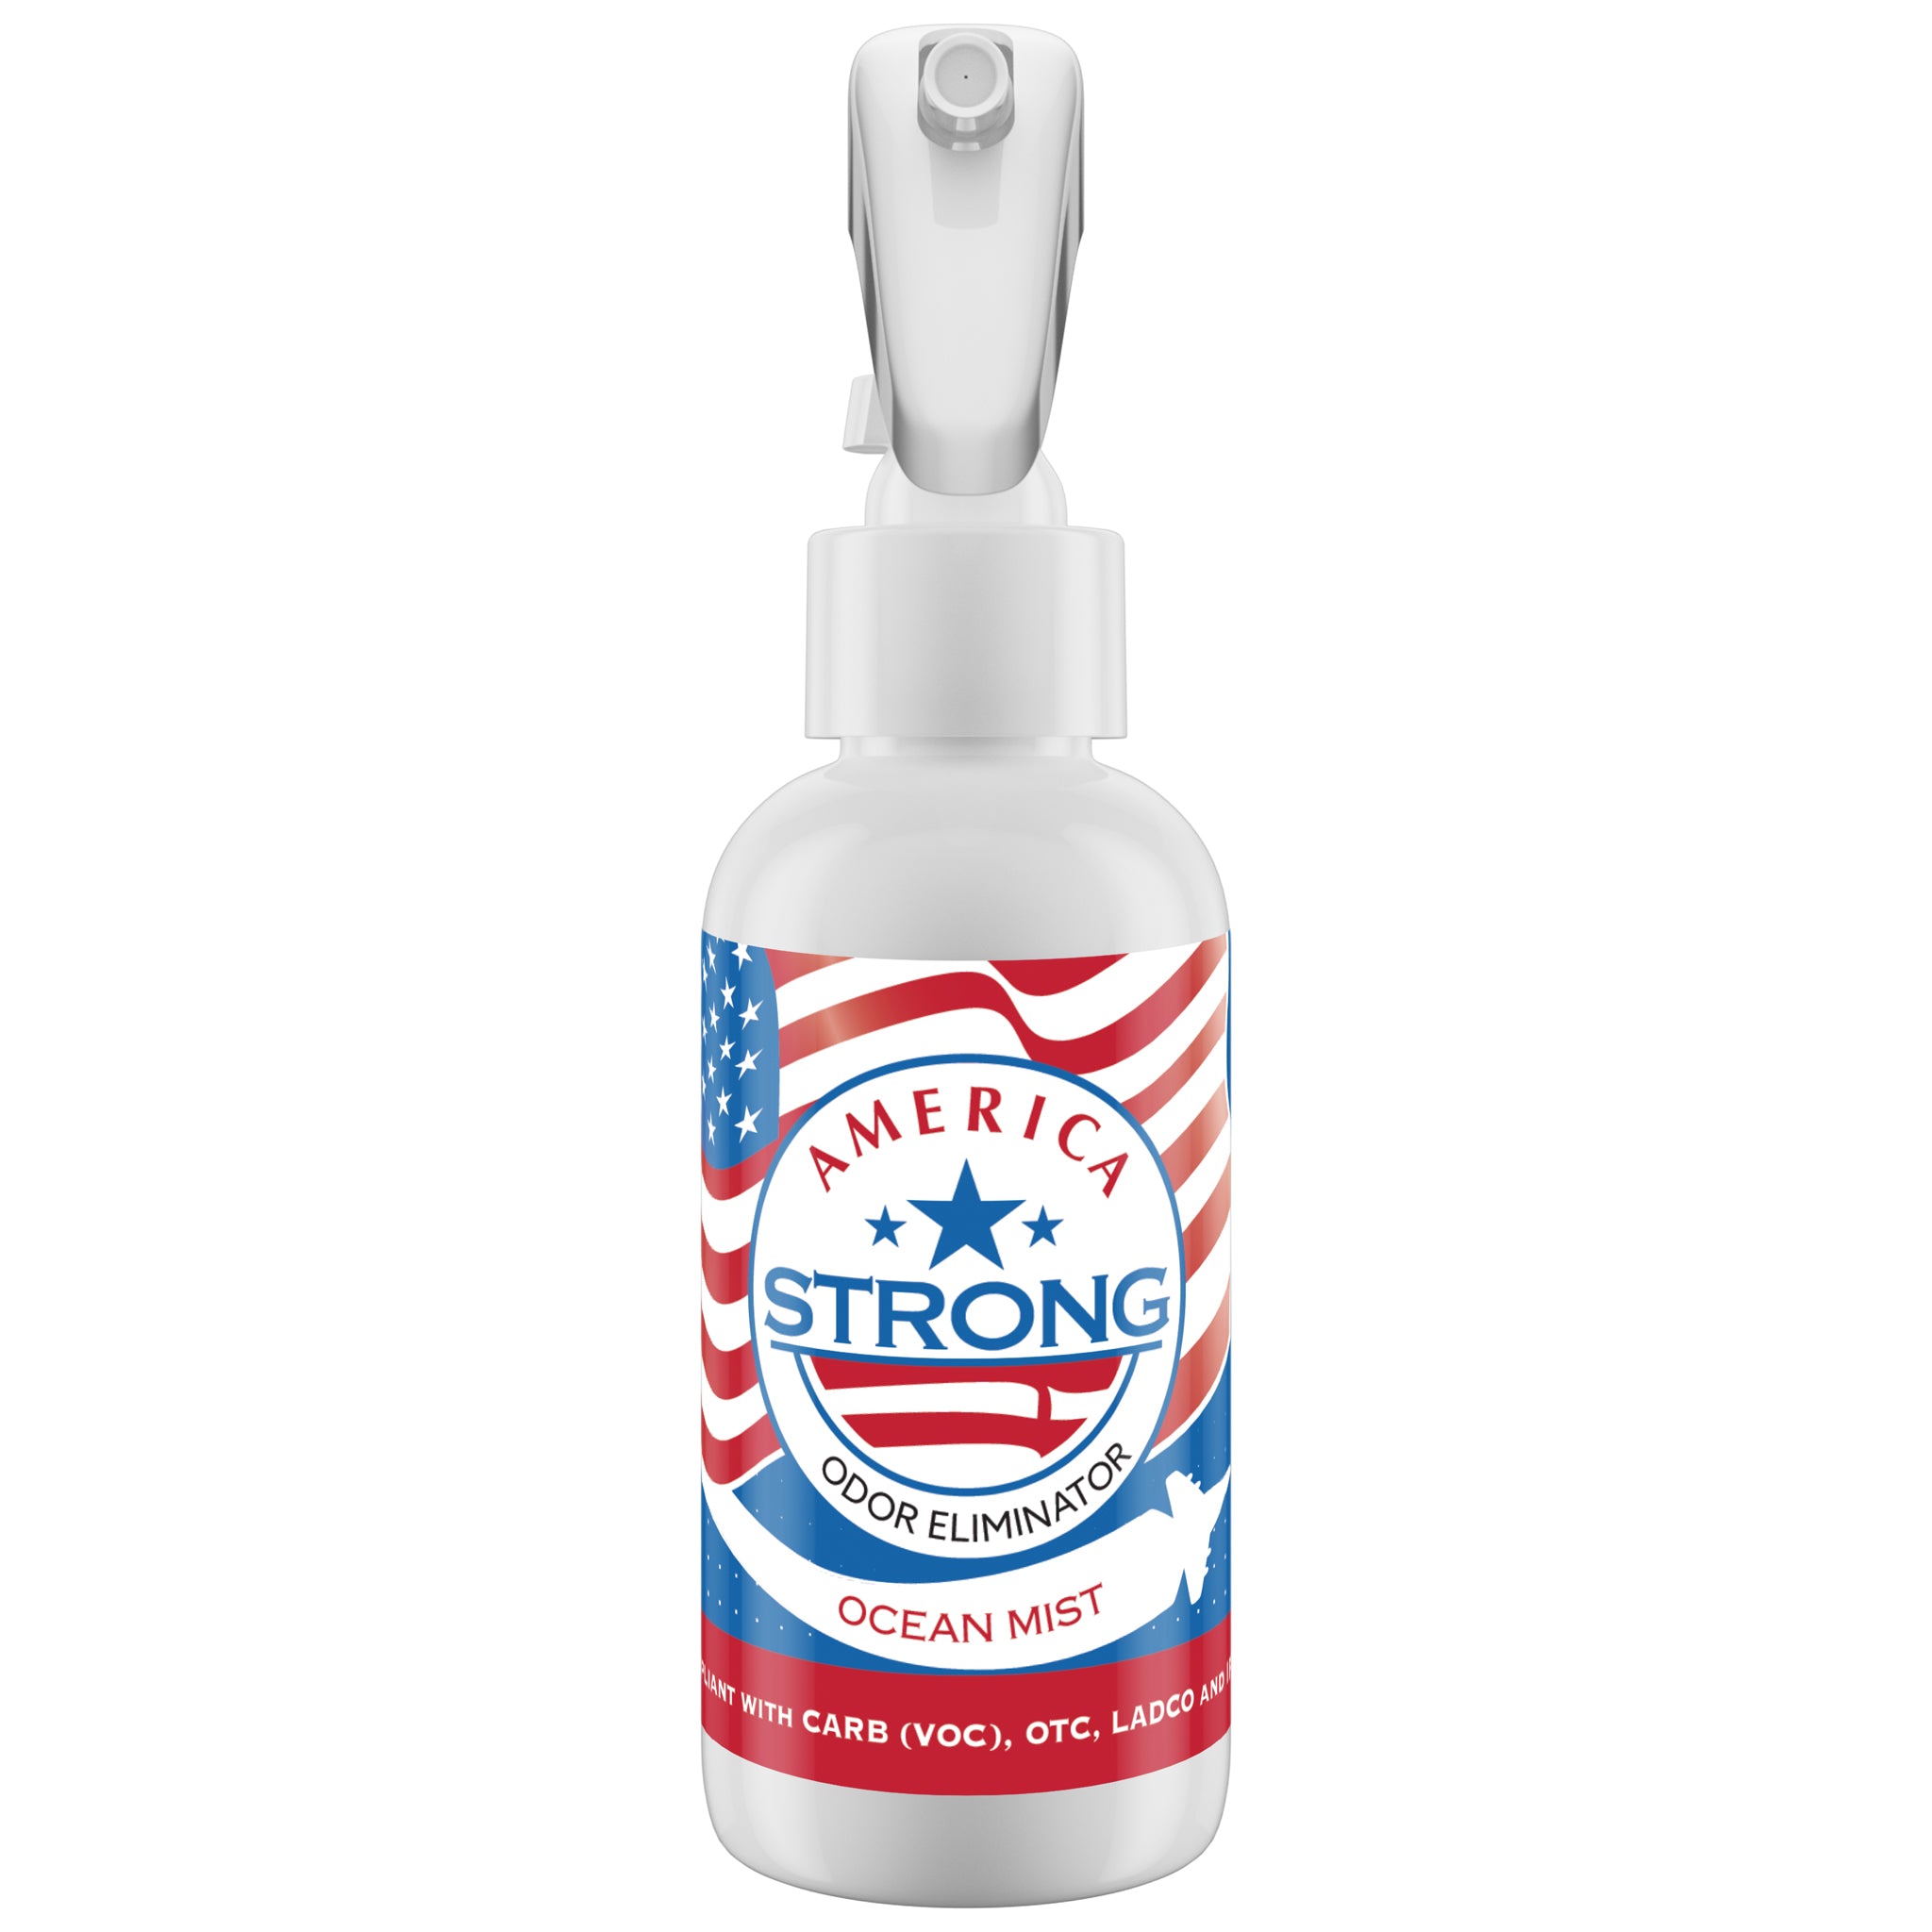 America Strong Odor Eliminator - Ocean Mist Scent Size: 4.0oz